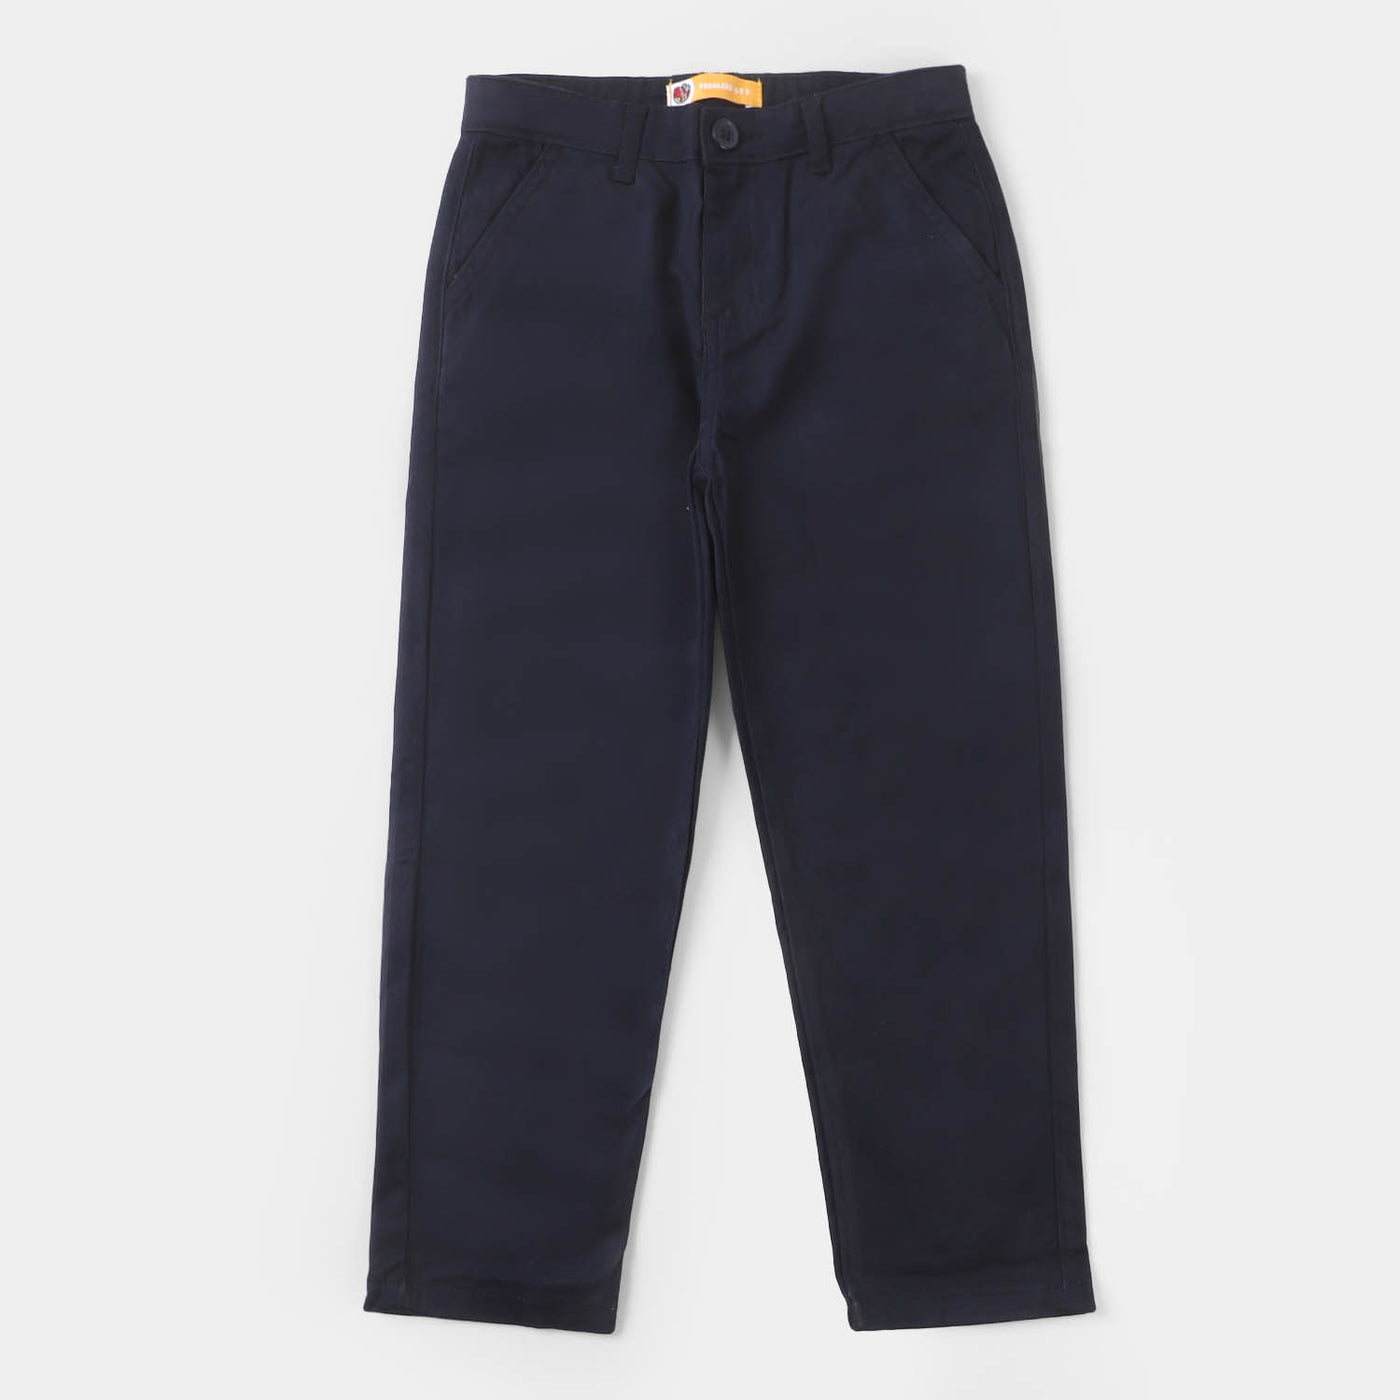 Boys Cotton Pant Basic - Navy Blue